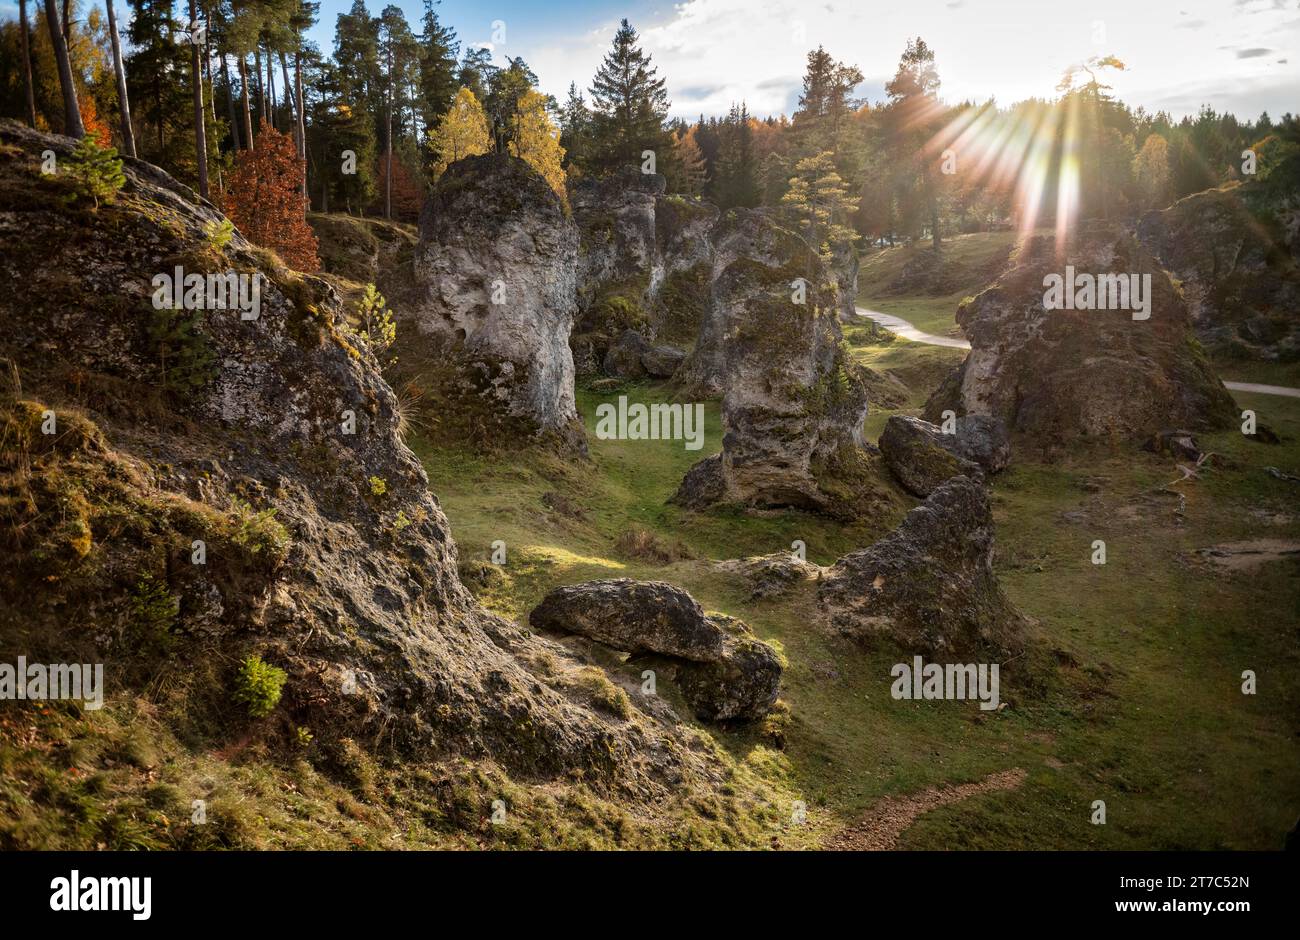 Dolomitfelsen, Meer der Felsen, Wental, Herbststimmung, Herbst, Sonnenuntergang, Barholomae, Baden-Württemberg, Deutschland Stockfoto